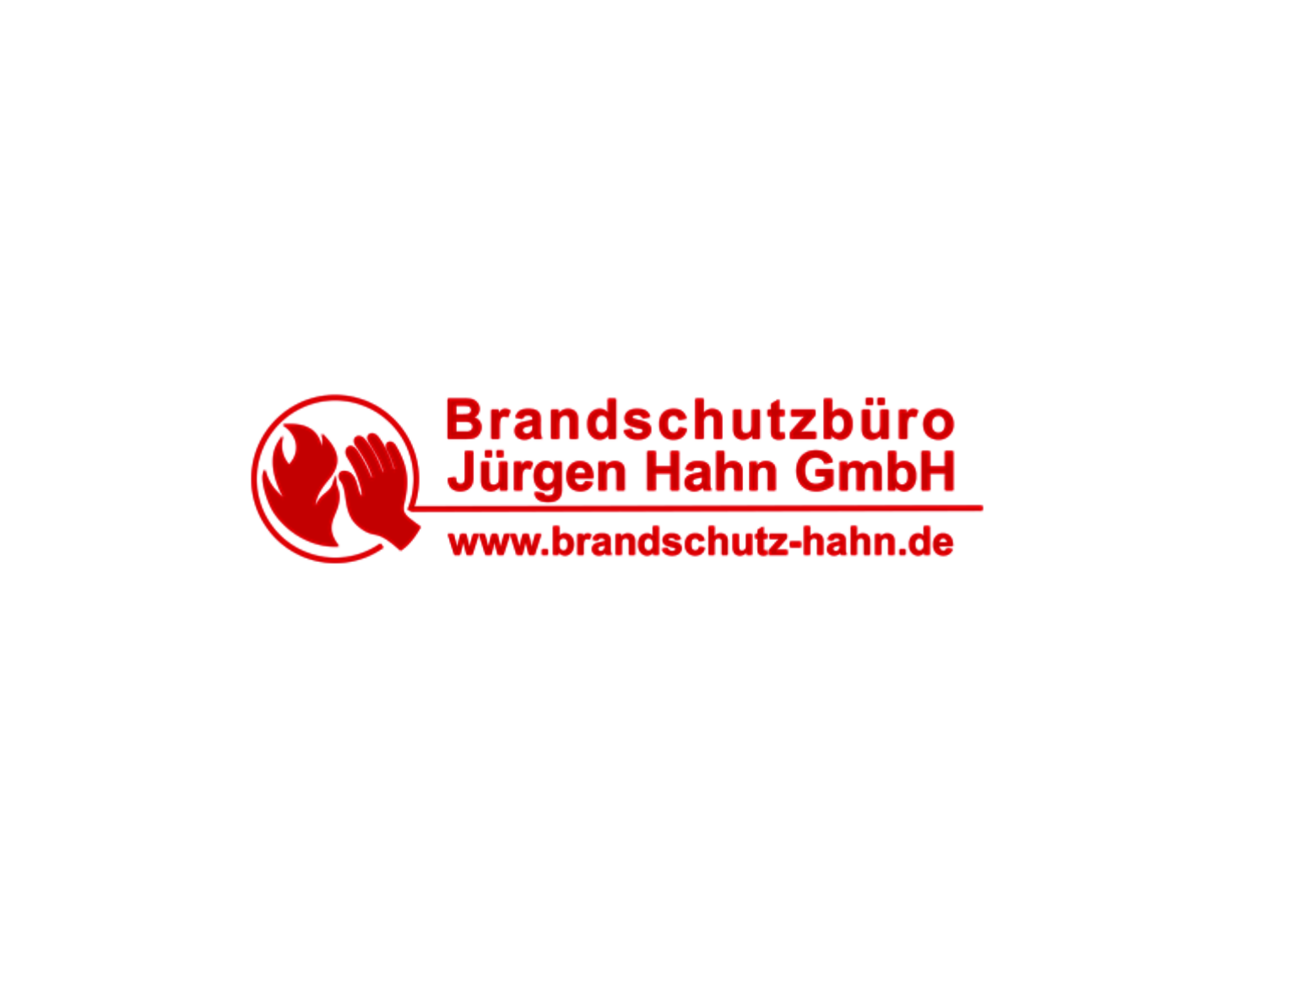 Brandschutzbuero__Logo